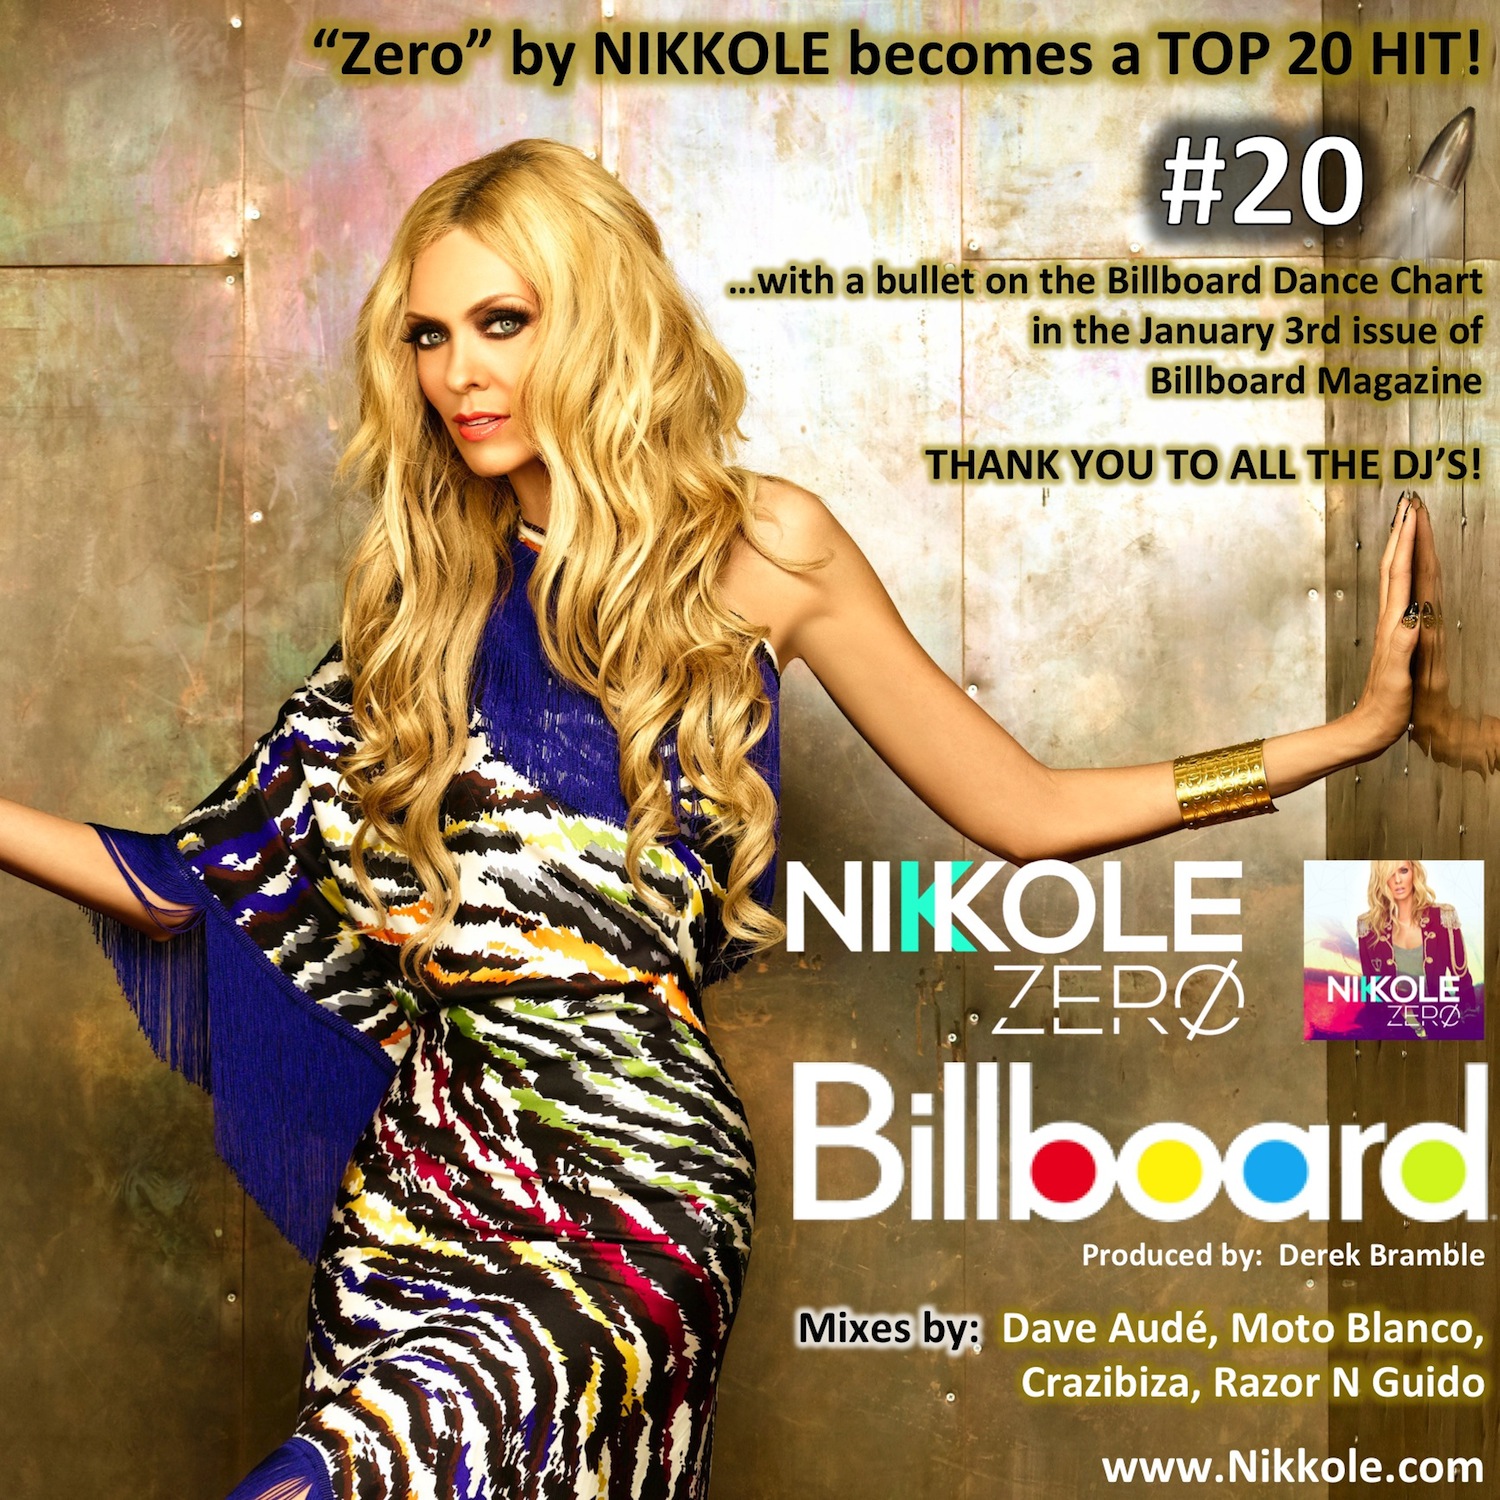 Zero Becomes a Top 20 Billboard Hit